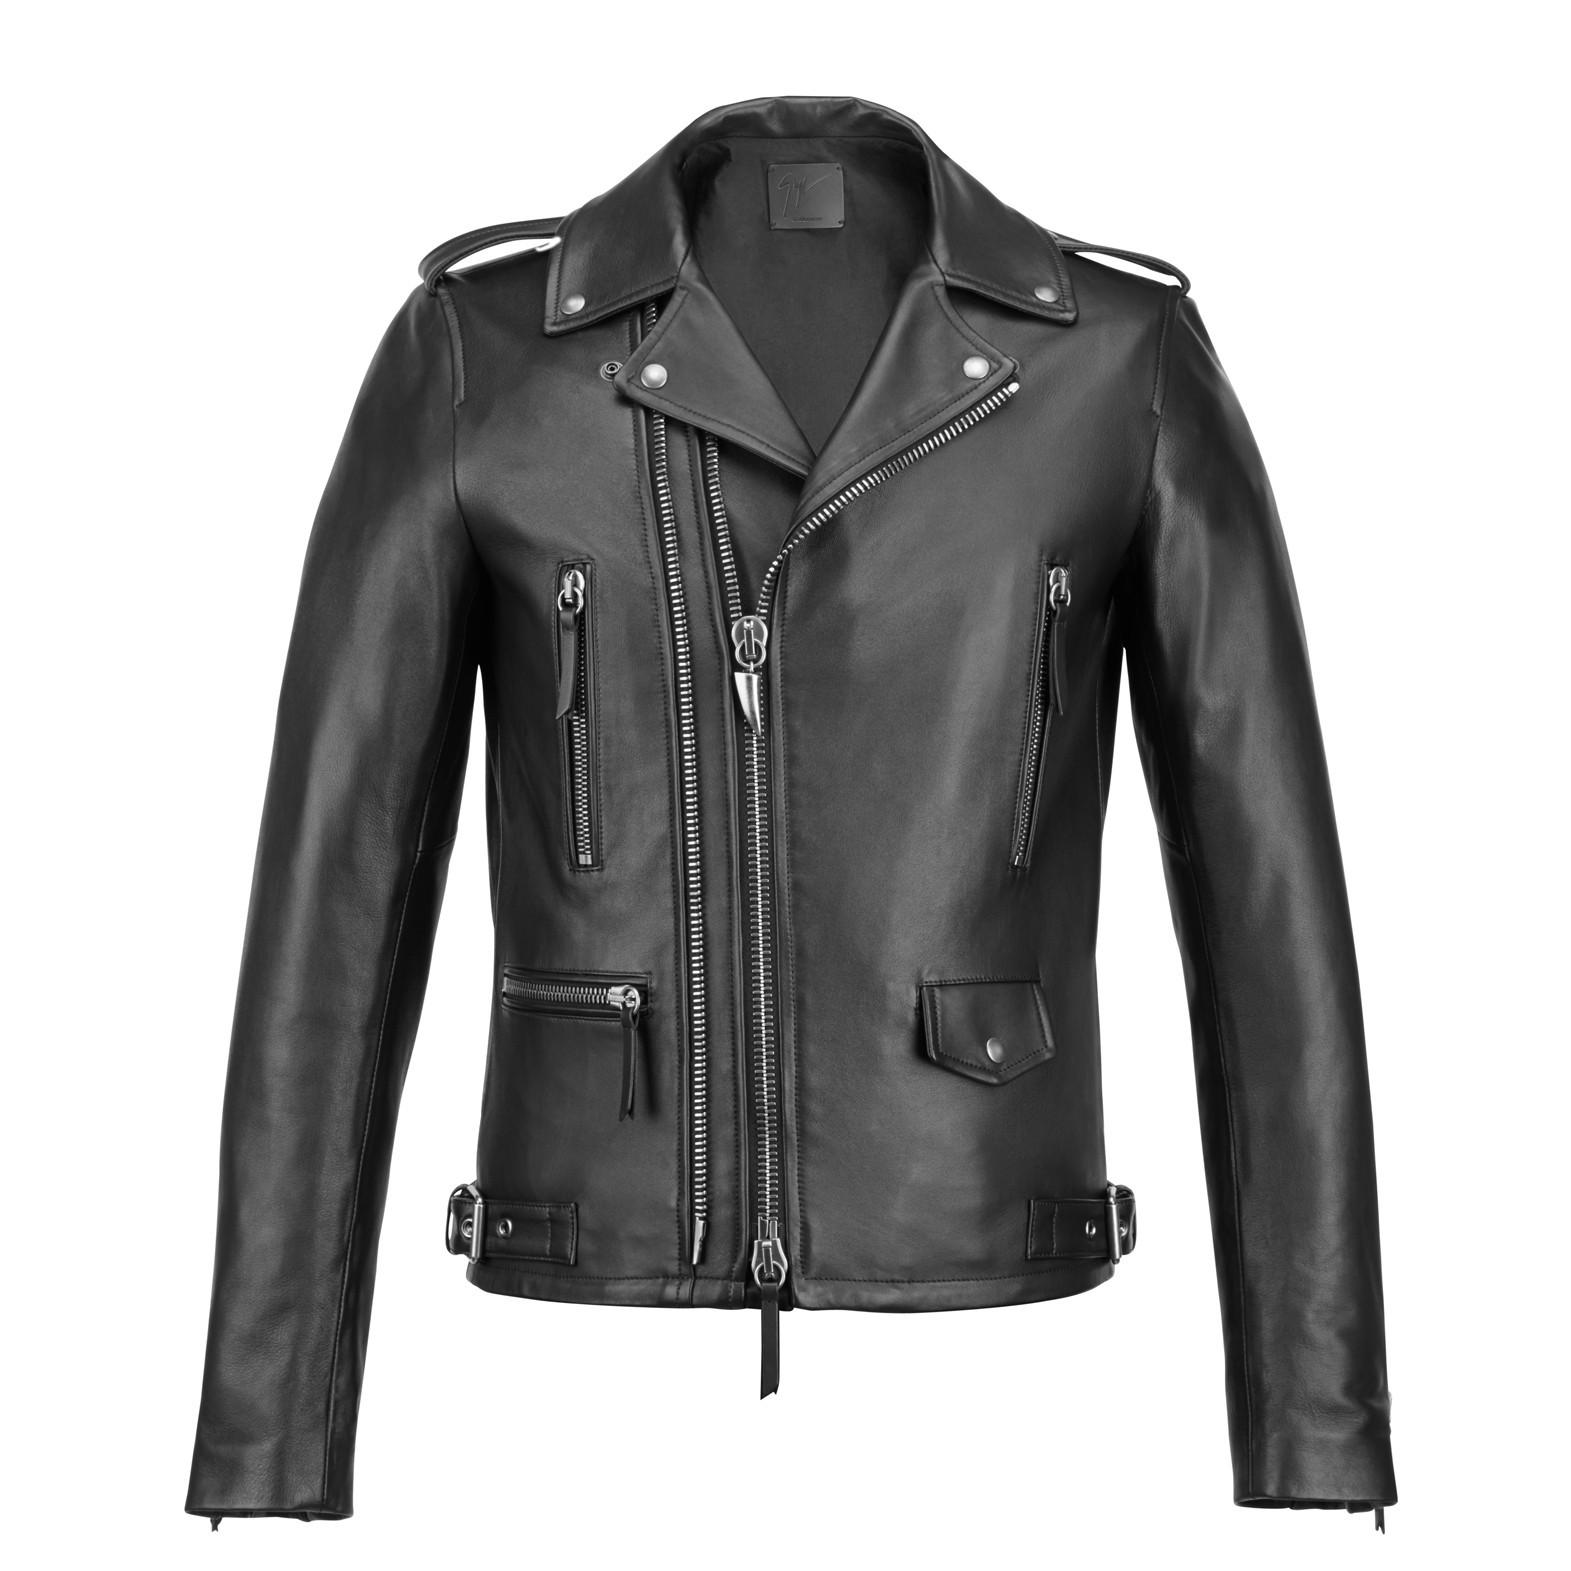 Giuseppe Zanotti Leather Biker Jacket Denzel in Black for Men - Lyst